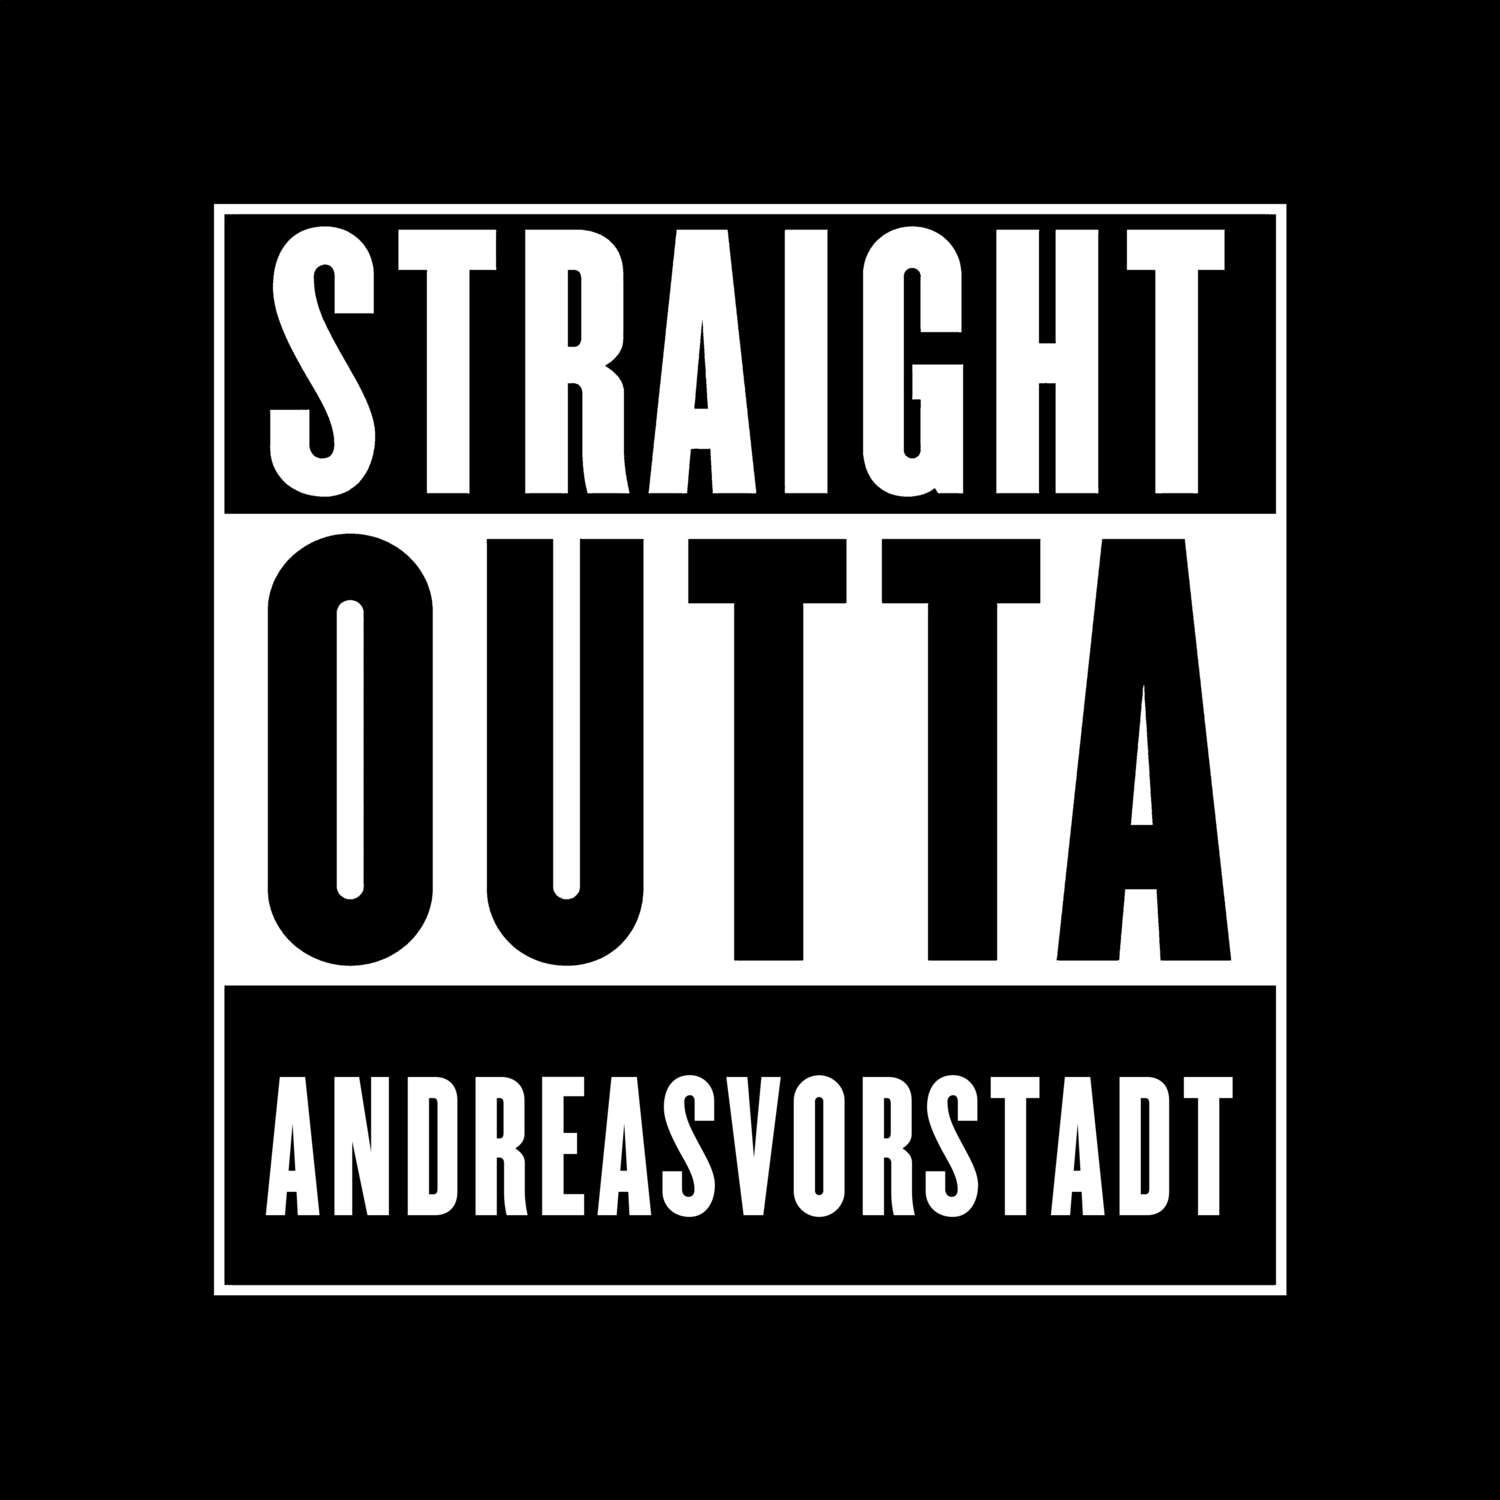 Andreasvorstadt T-Shirt »Straight Outta«